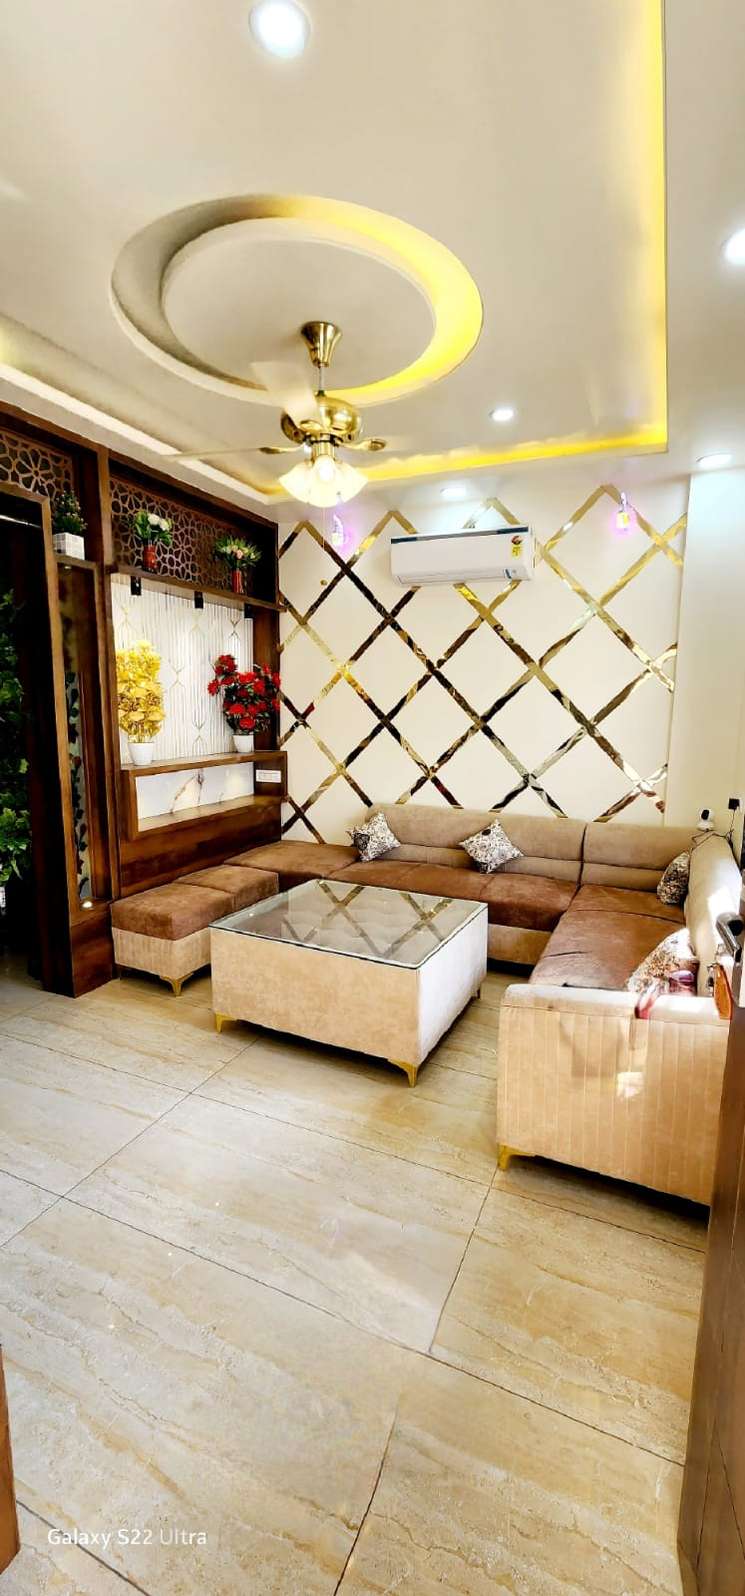 3 Bedroom 145 Sq.Yd. Independent House in Vaishali Nagar Jaipur